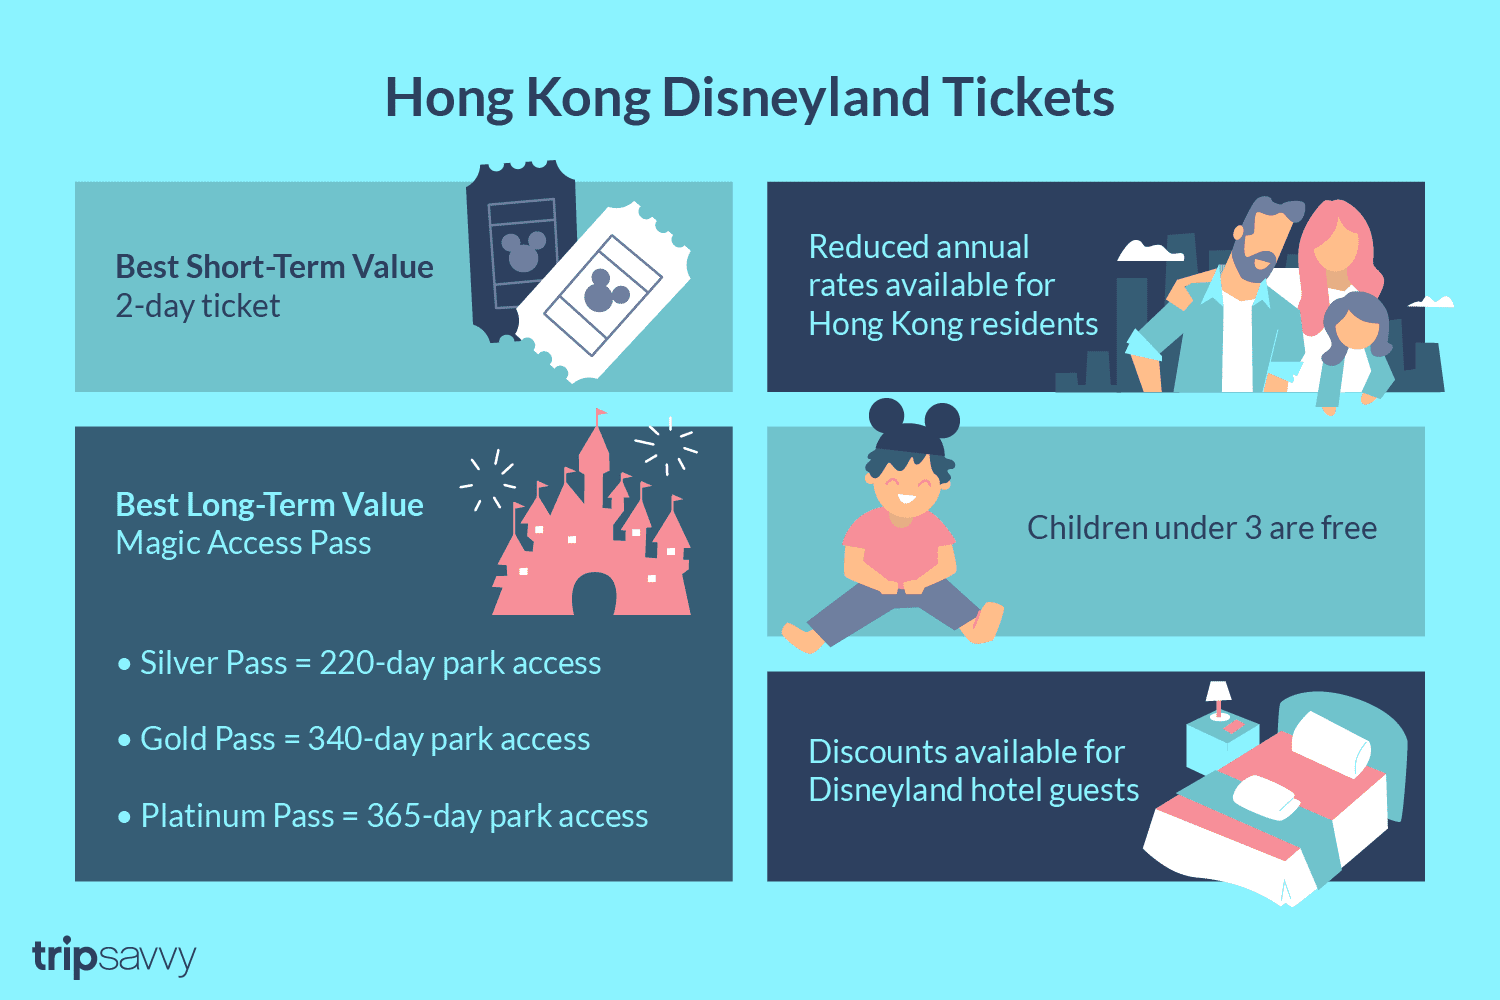 Hong Kong Disneyland Logo - Where to Get Discounts on Hong Kong Disneyland Ticket Prices